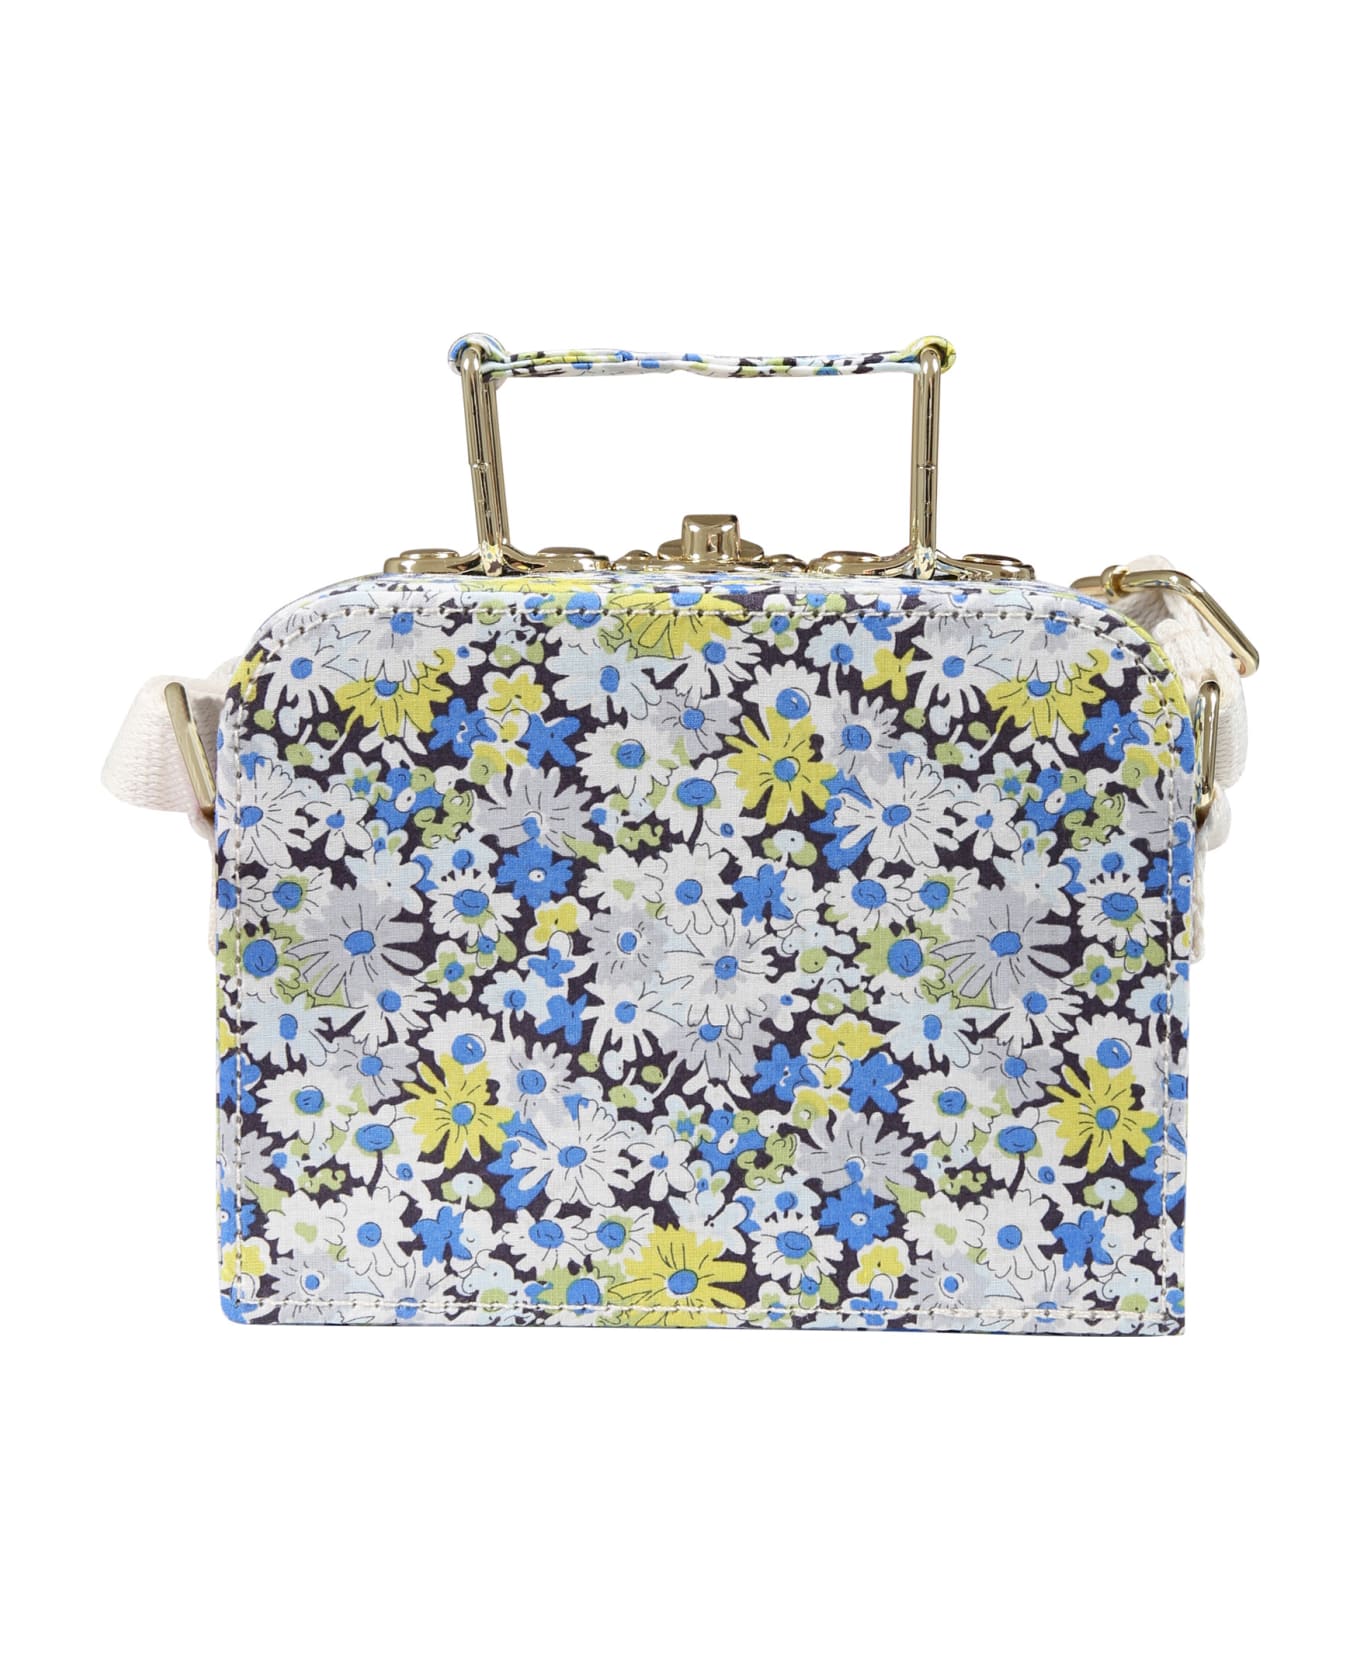 Bonpoint Light Blue Bag For Girl With Floral Pattern - Light Blue アクセサリー＆ギフト